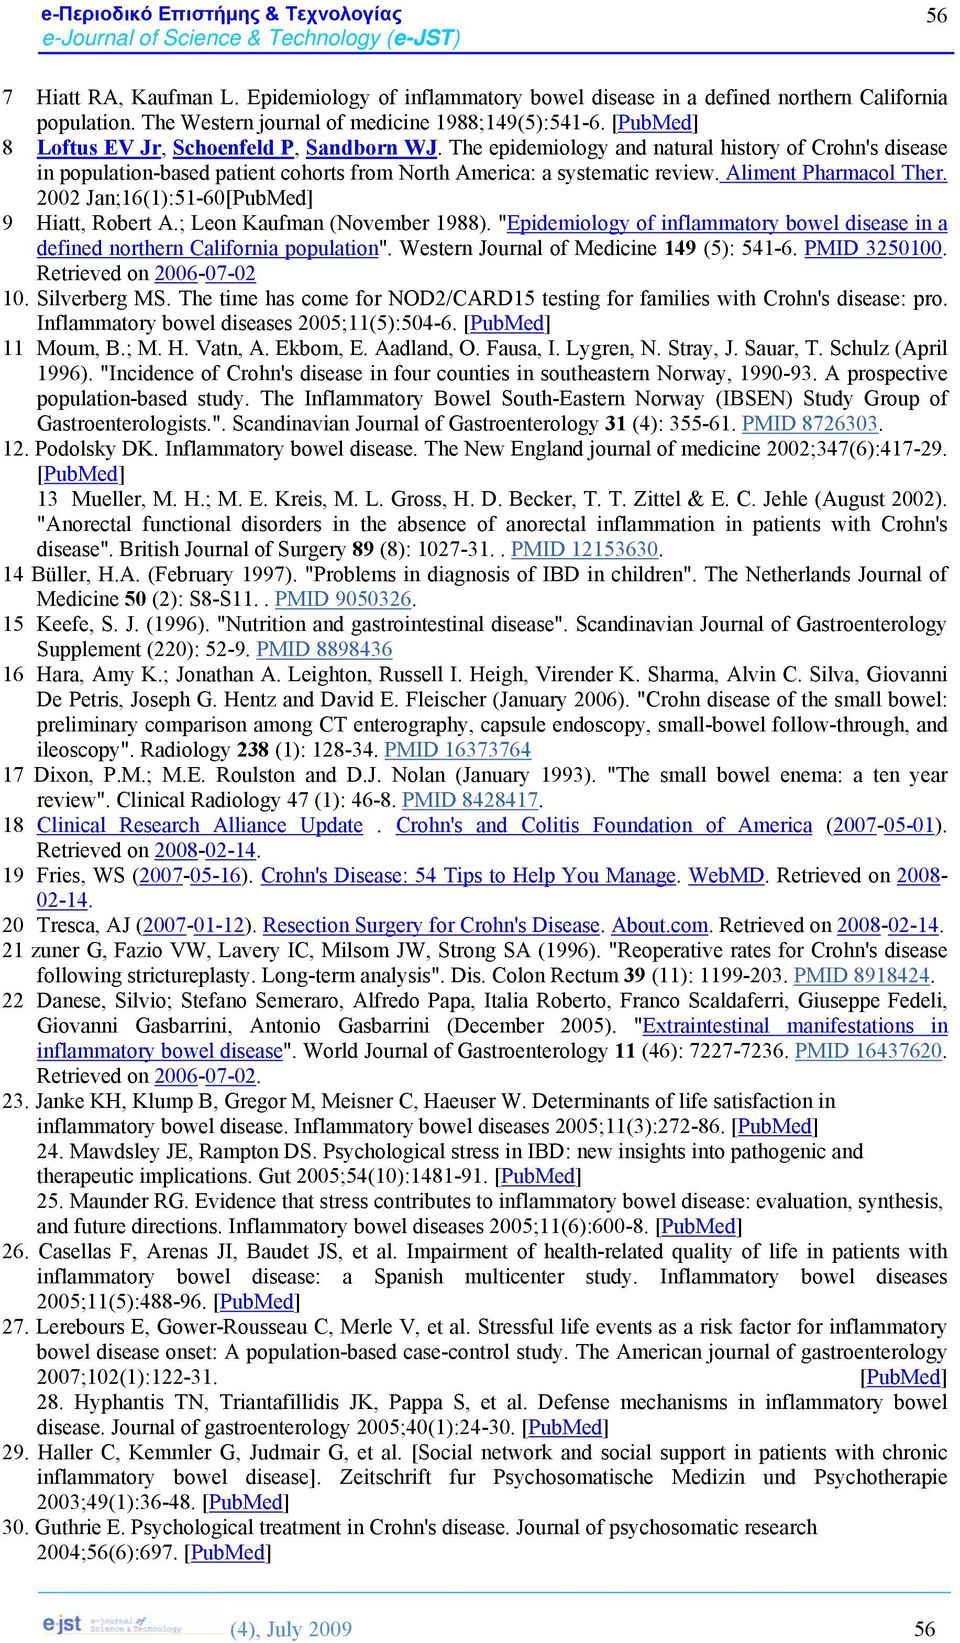 Aliment Pharmacol Ther. 2002 Jan;16(1):51-60[PubMed] 9 Hiatt, Robert A.; Leon Kaufman (November 1988). "Epidemiology of inflammatory bowel disease in a defined northern California population".